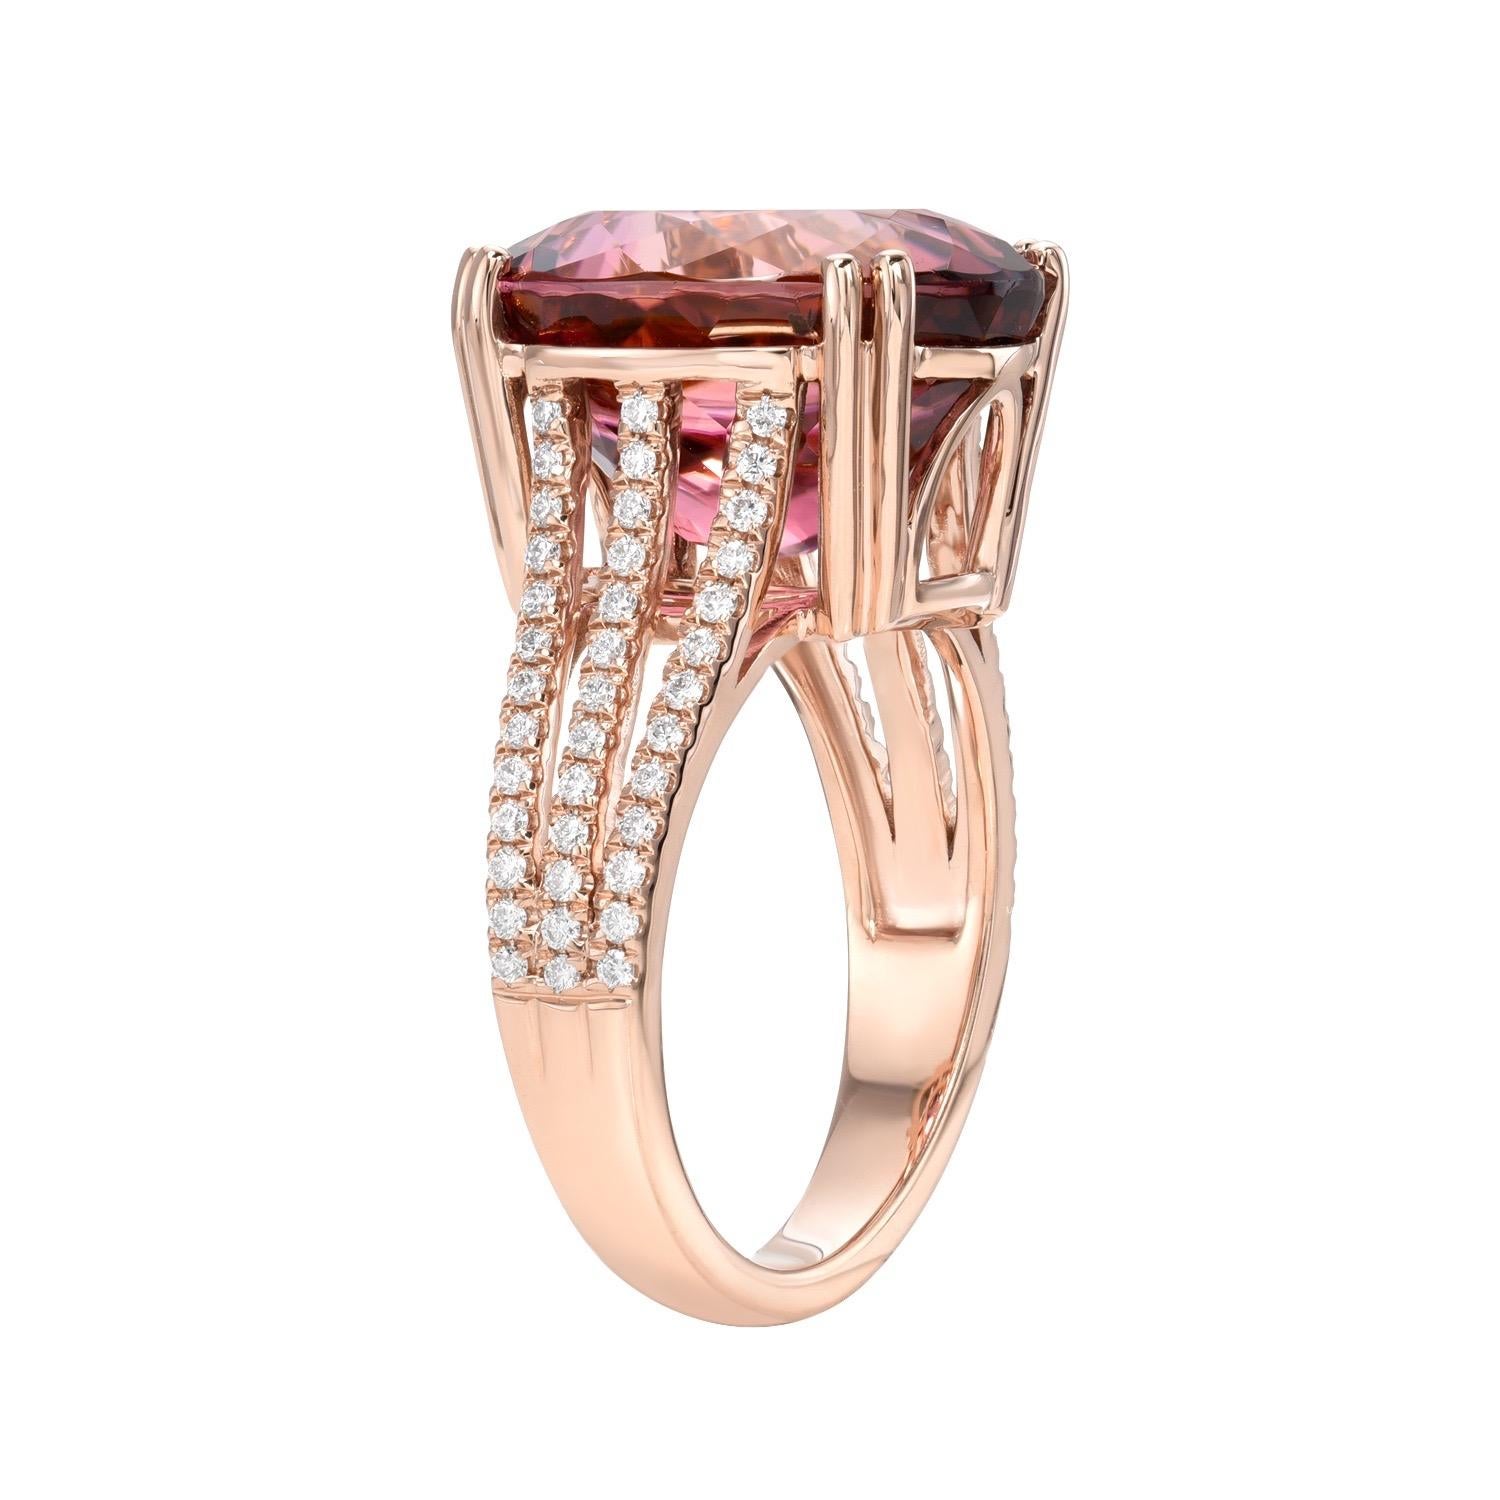 oval pink tourmaline ring